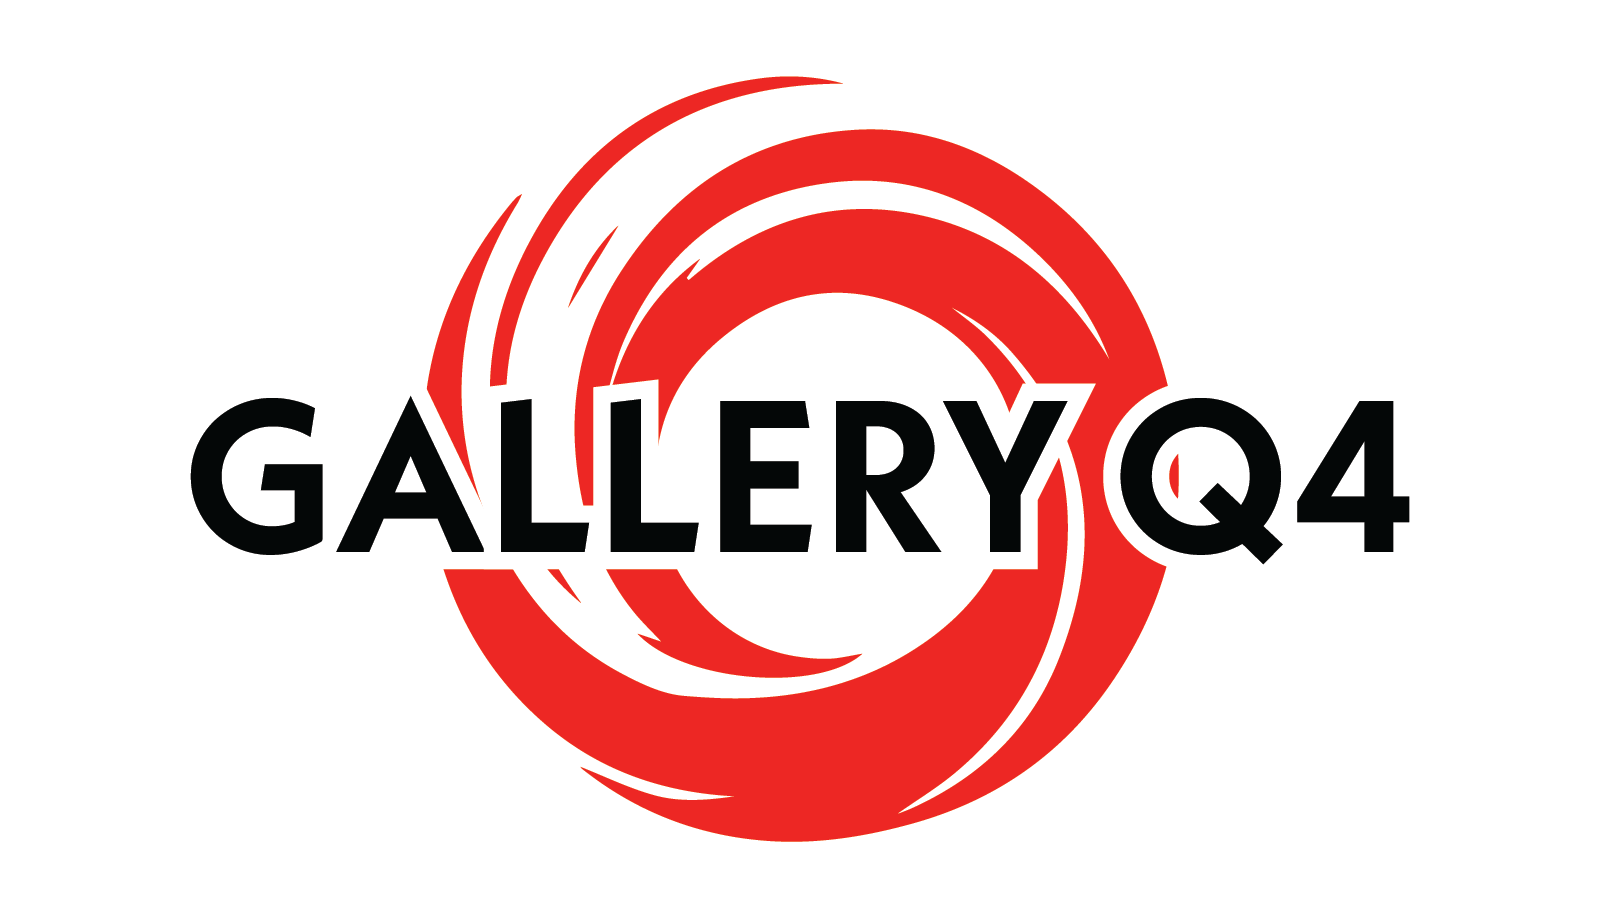 Gallery Q4